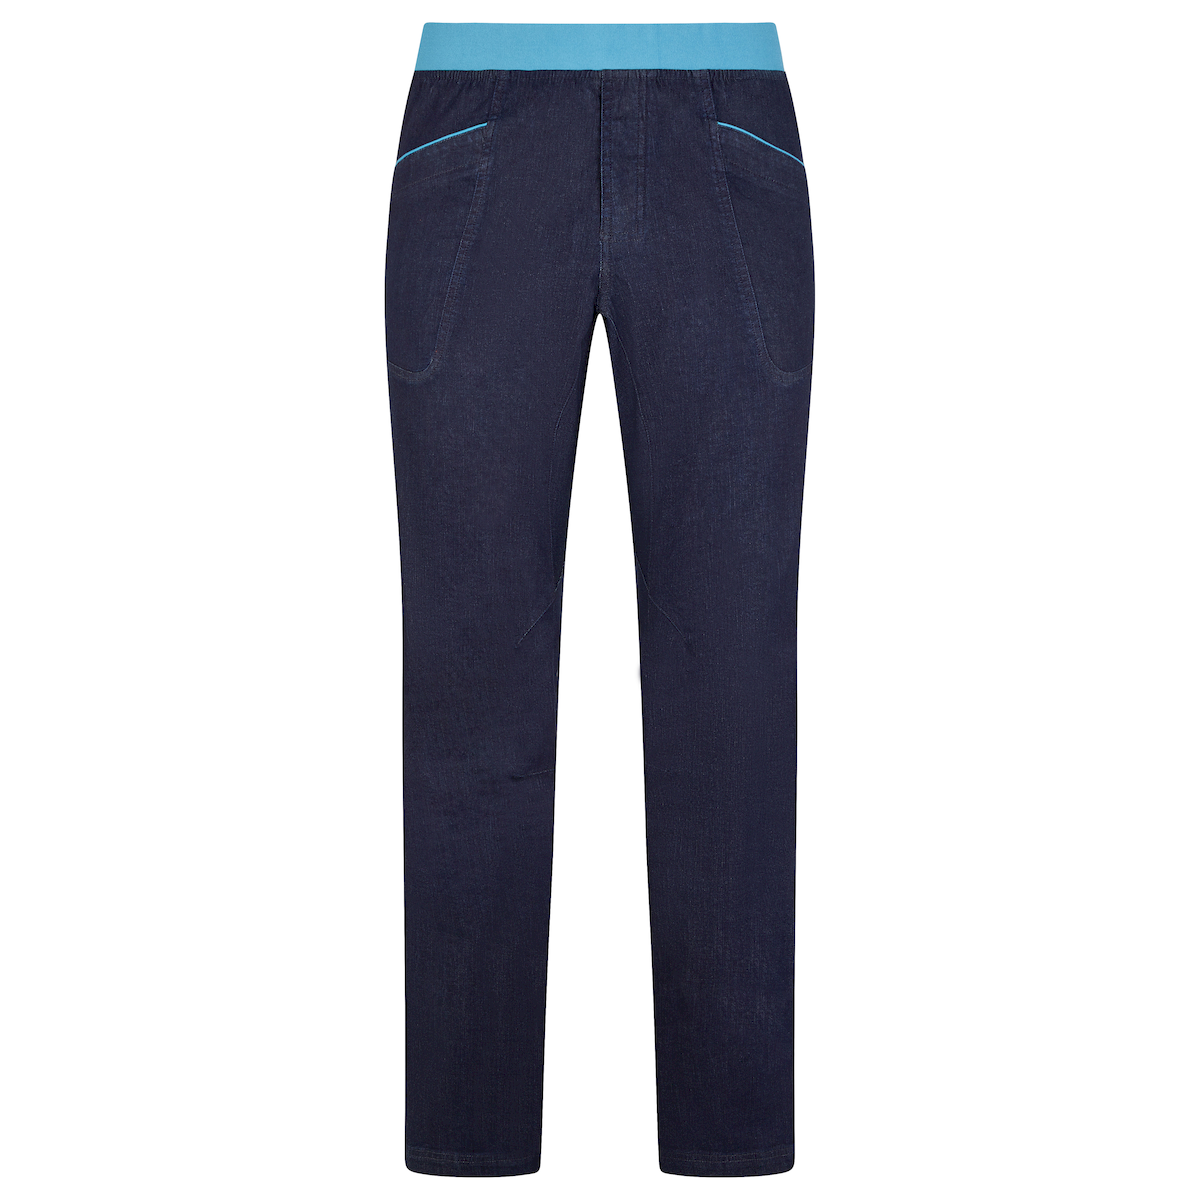 La Sportiva Cave Jeans - Climbing trousers - Men's